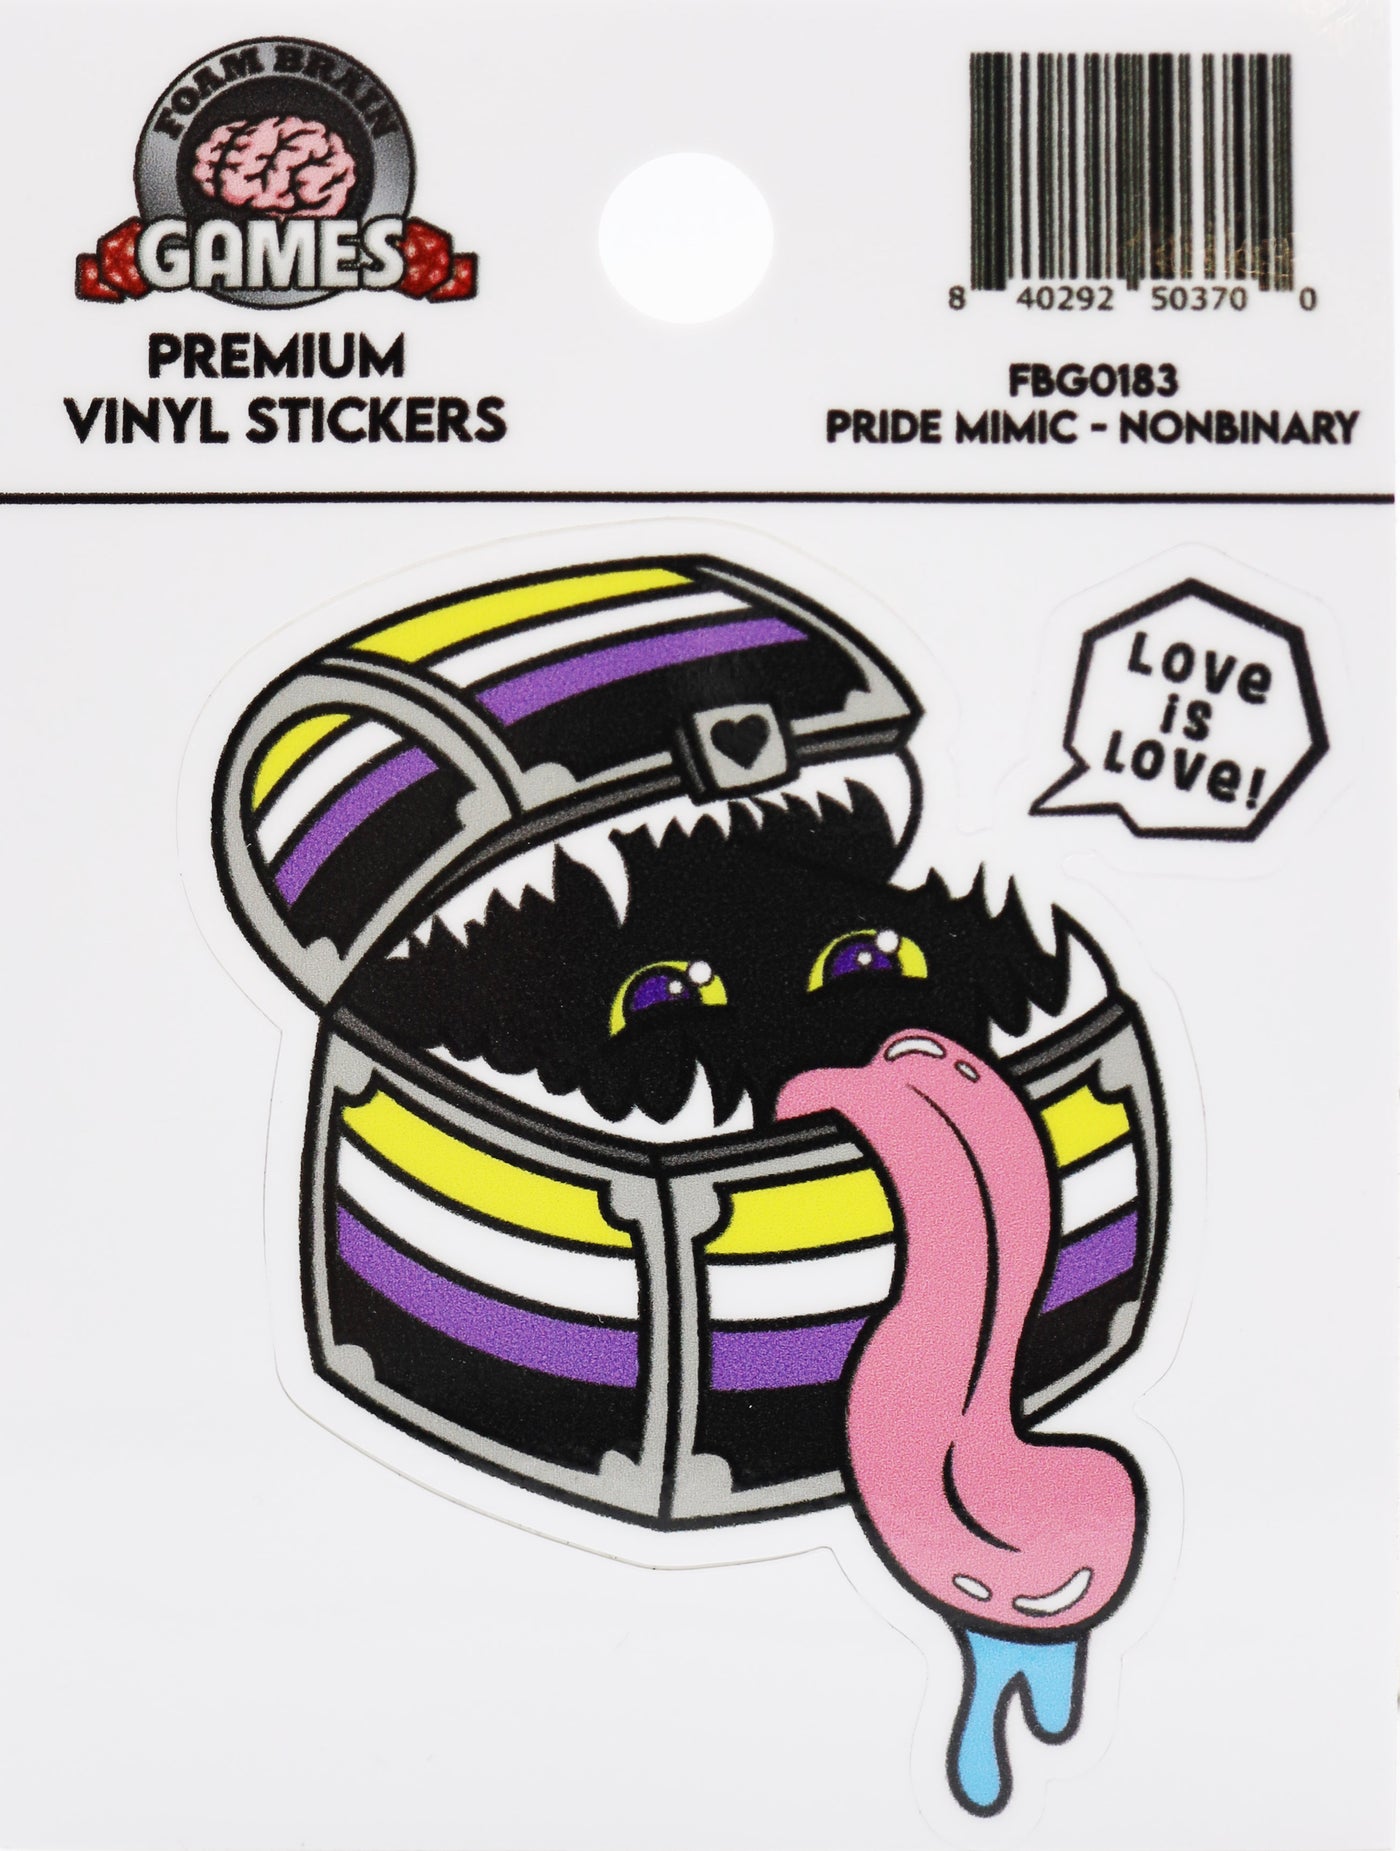 Pride Mimic Sticker: Nonbinary Stickers Foam Brain Games